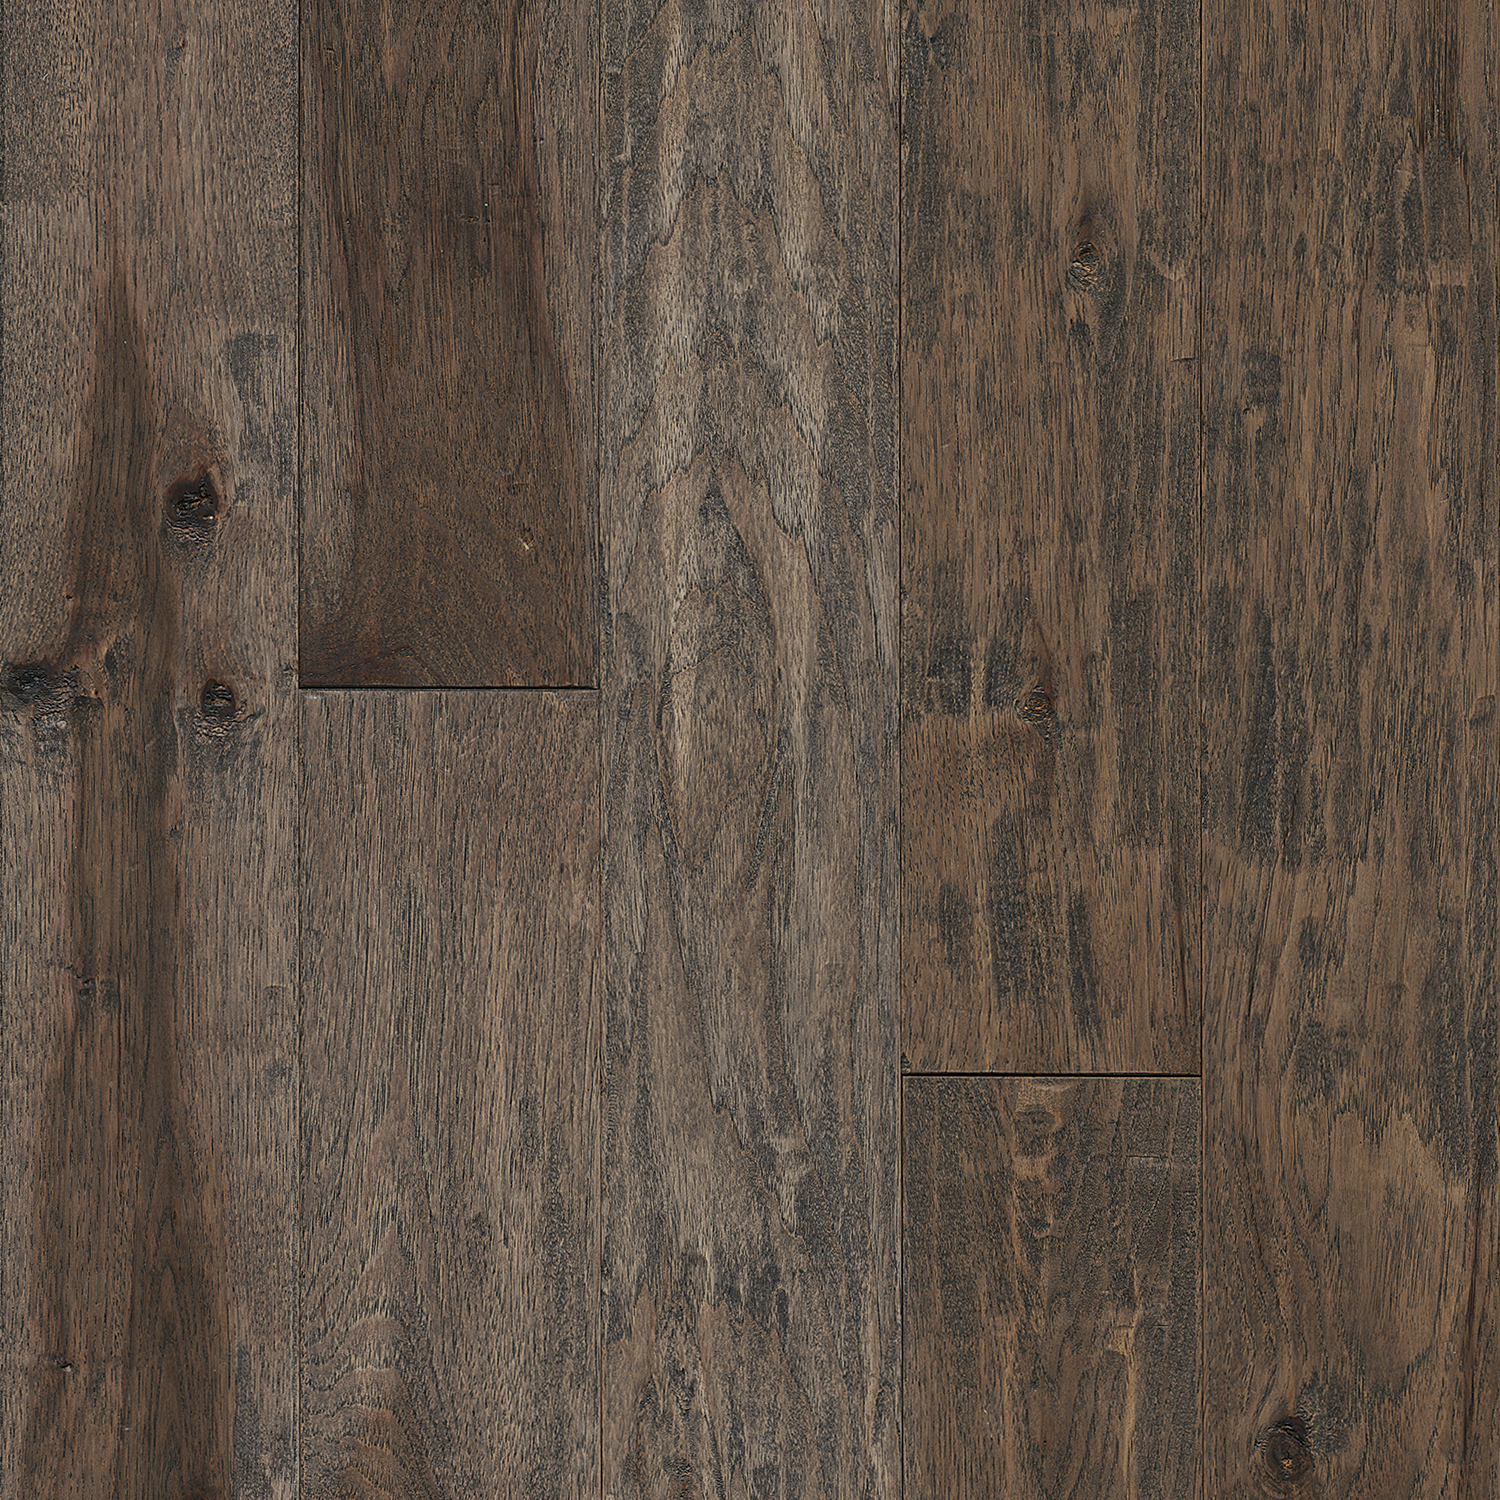 Hickory Solid Hardwood Sas524, Armstrong Solid Hardwood Flooring